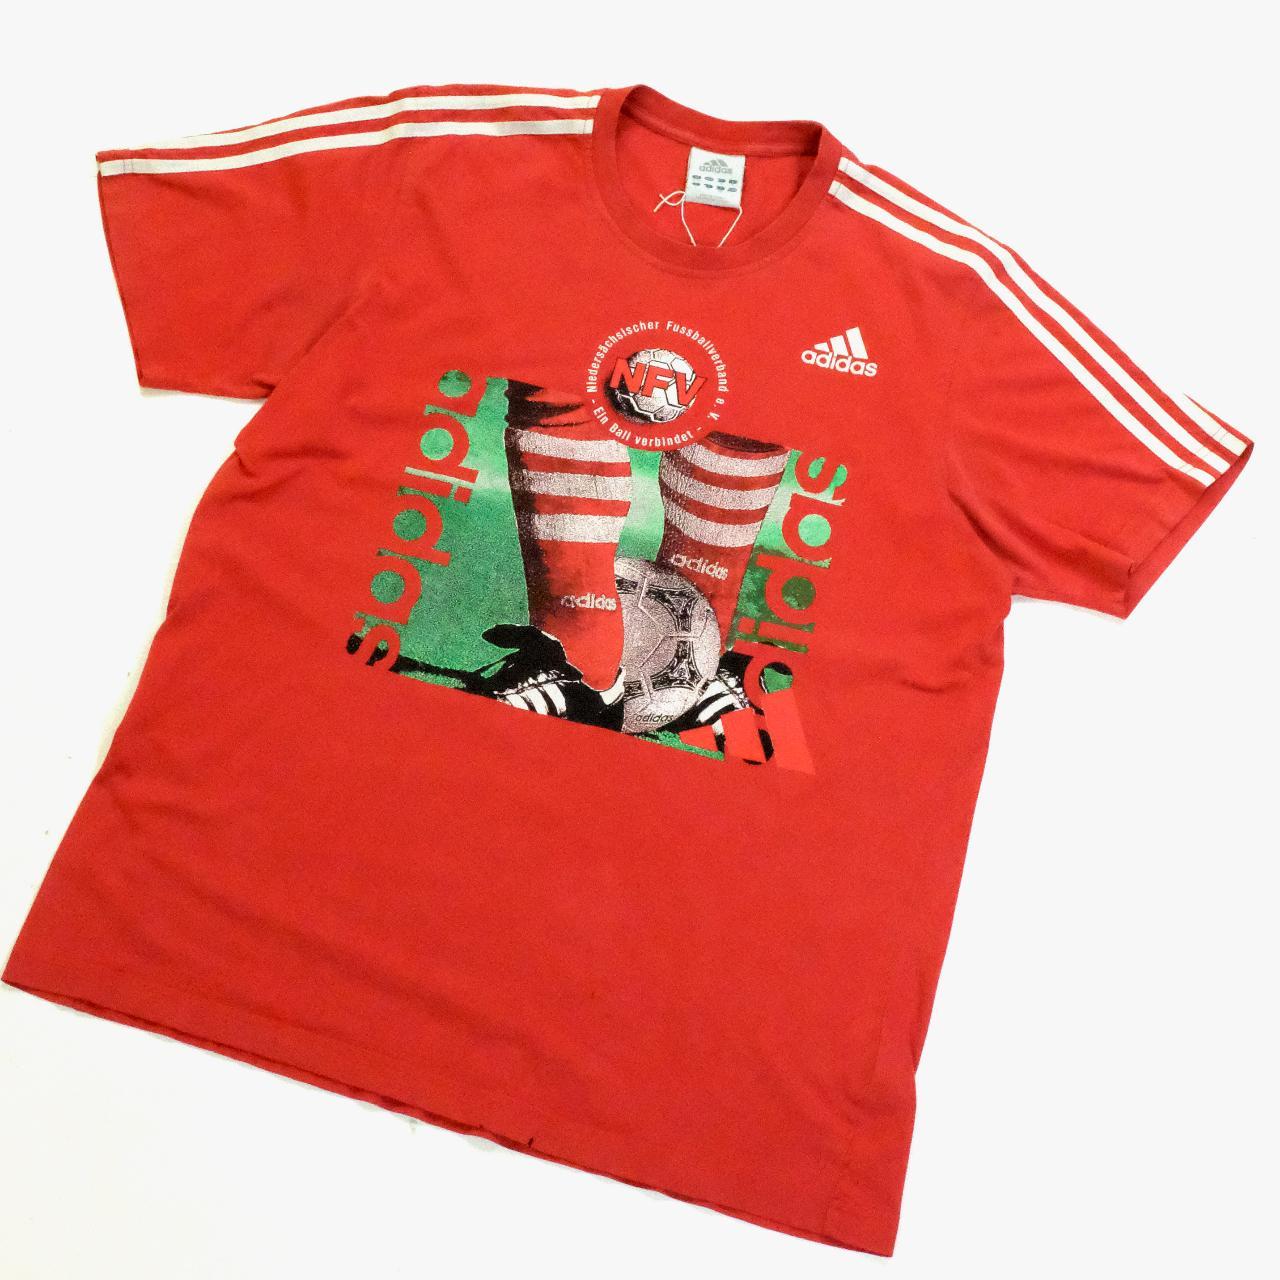 Adidas Football T-shirt